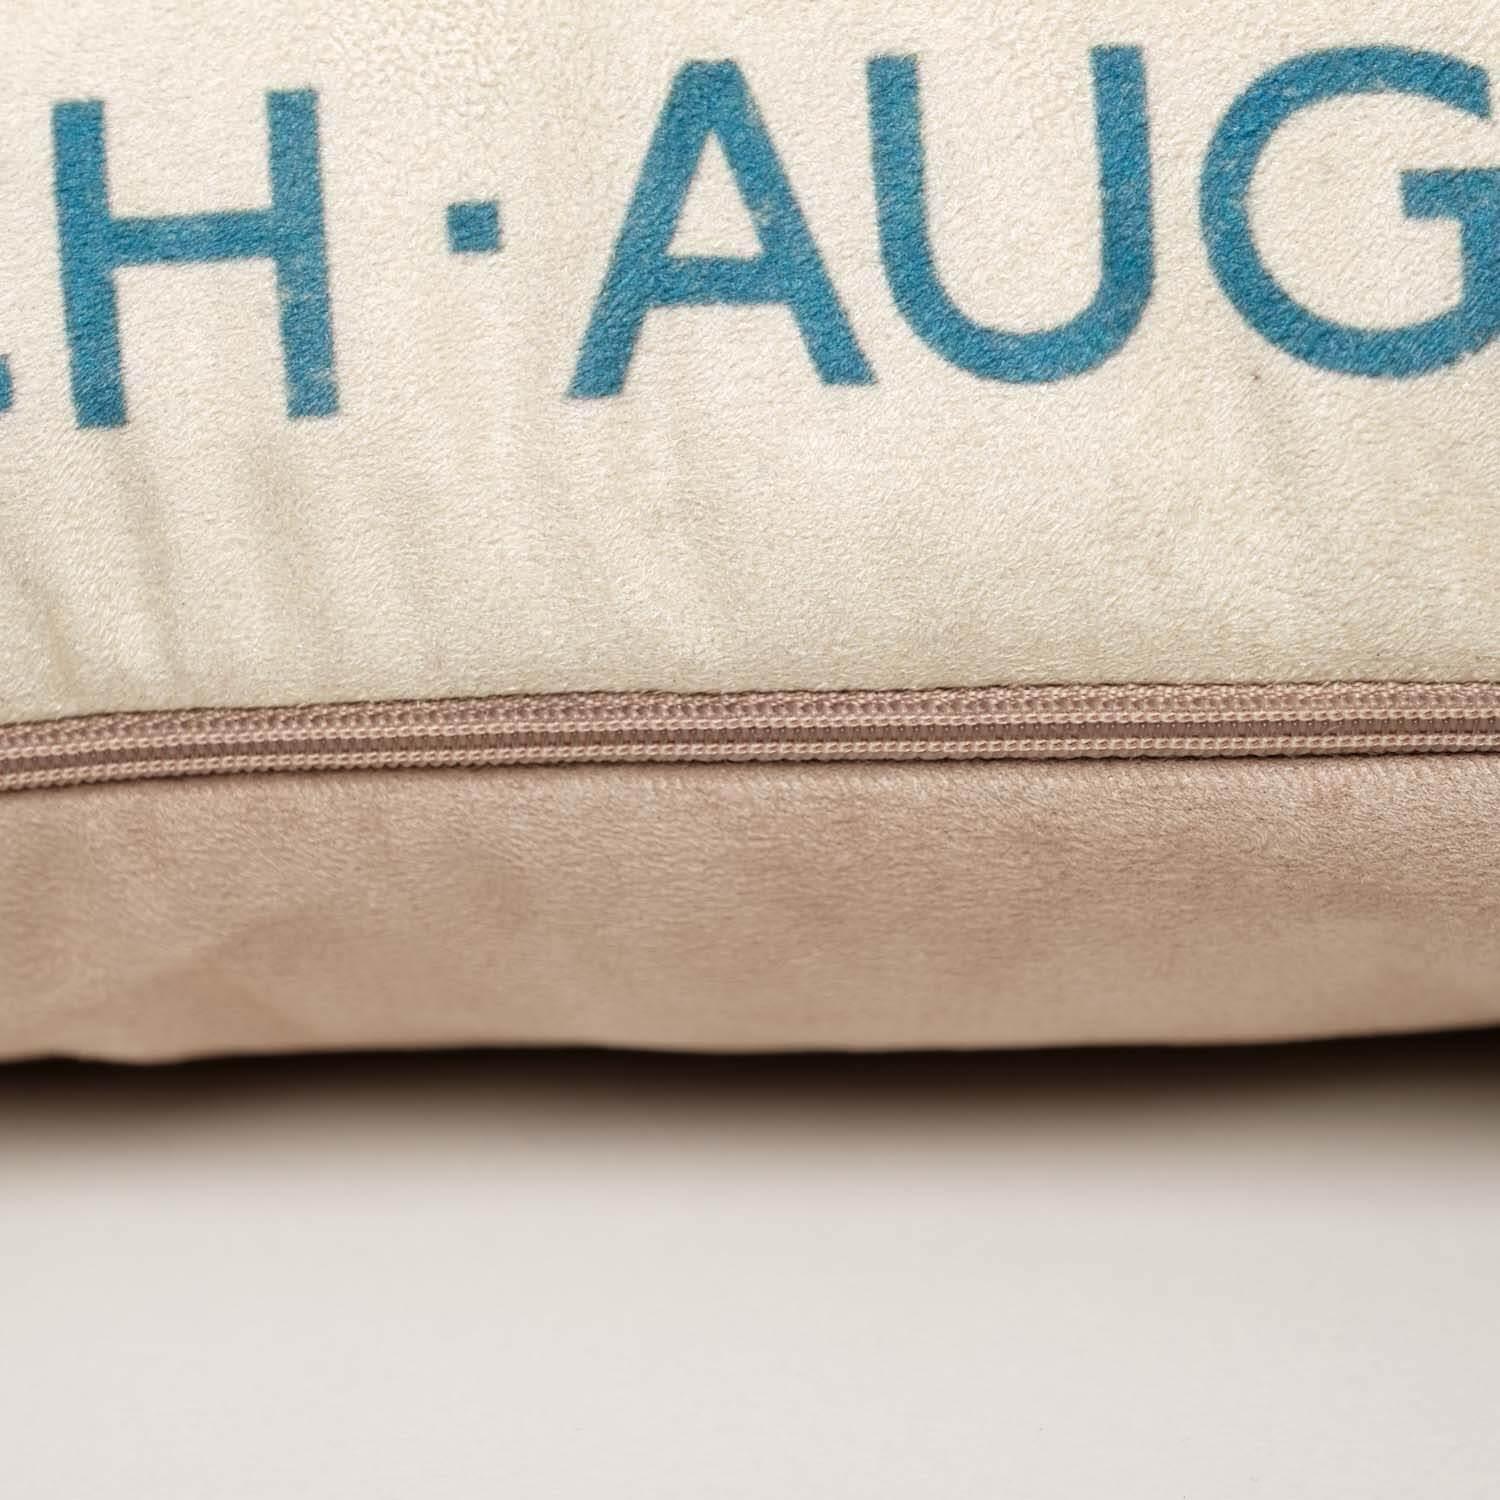 High Beach - London Transport Cushion - Handmade Cushions UK - WeLoveCushions